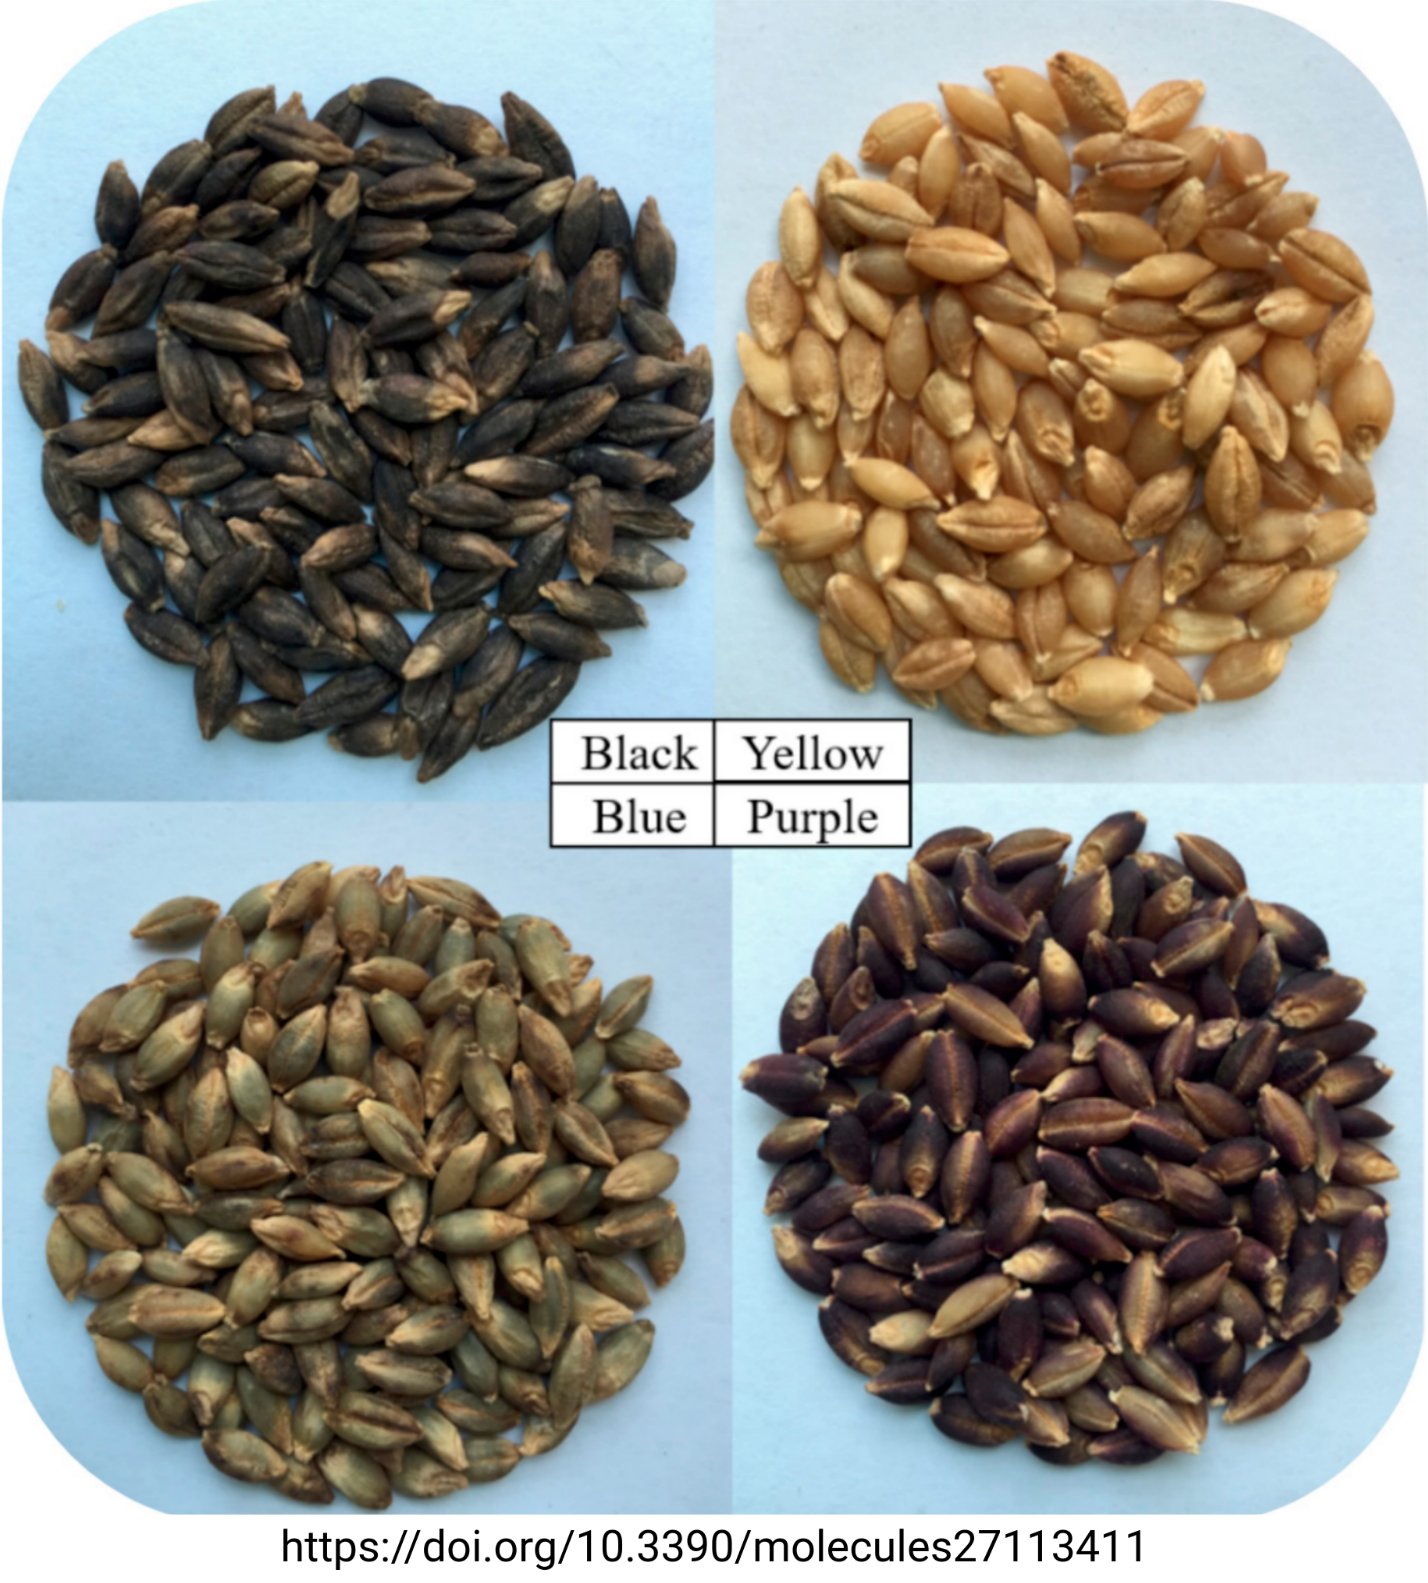 Highland barley cultivars are rich anthocyanin sources (Tweet #68)